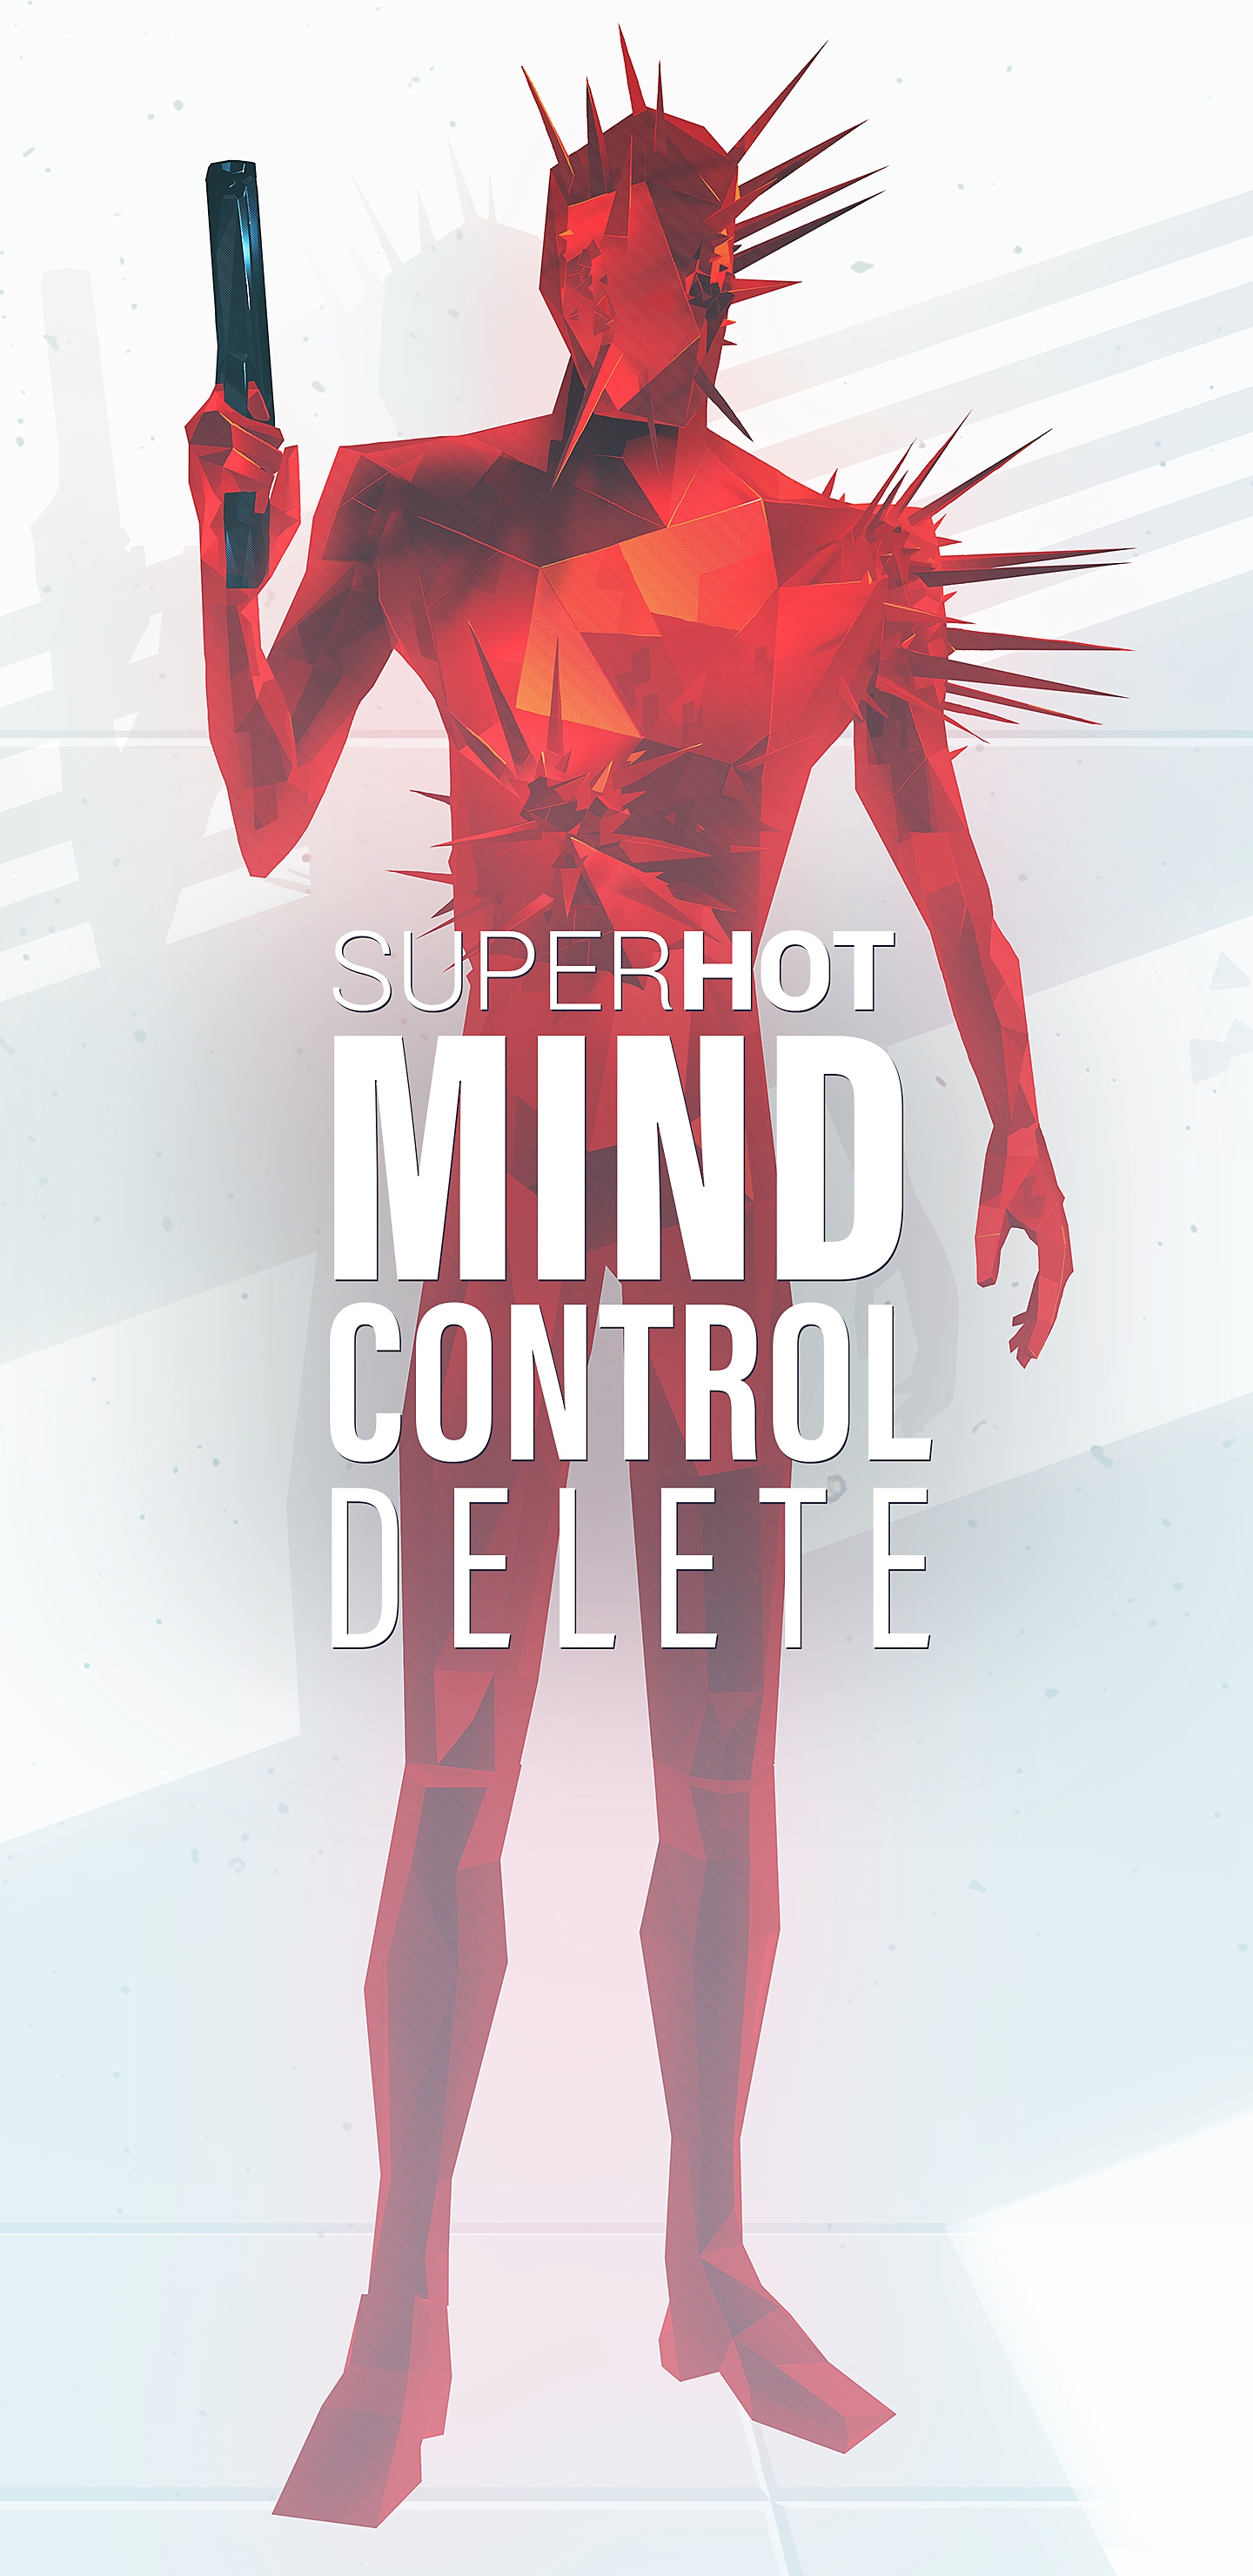 SUPERHOT: MIND CONTROL DELETE – mobilno